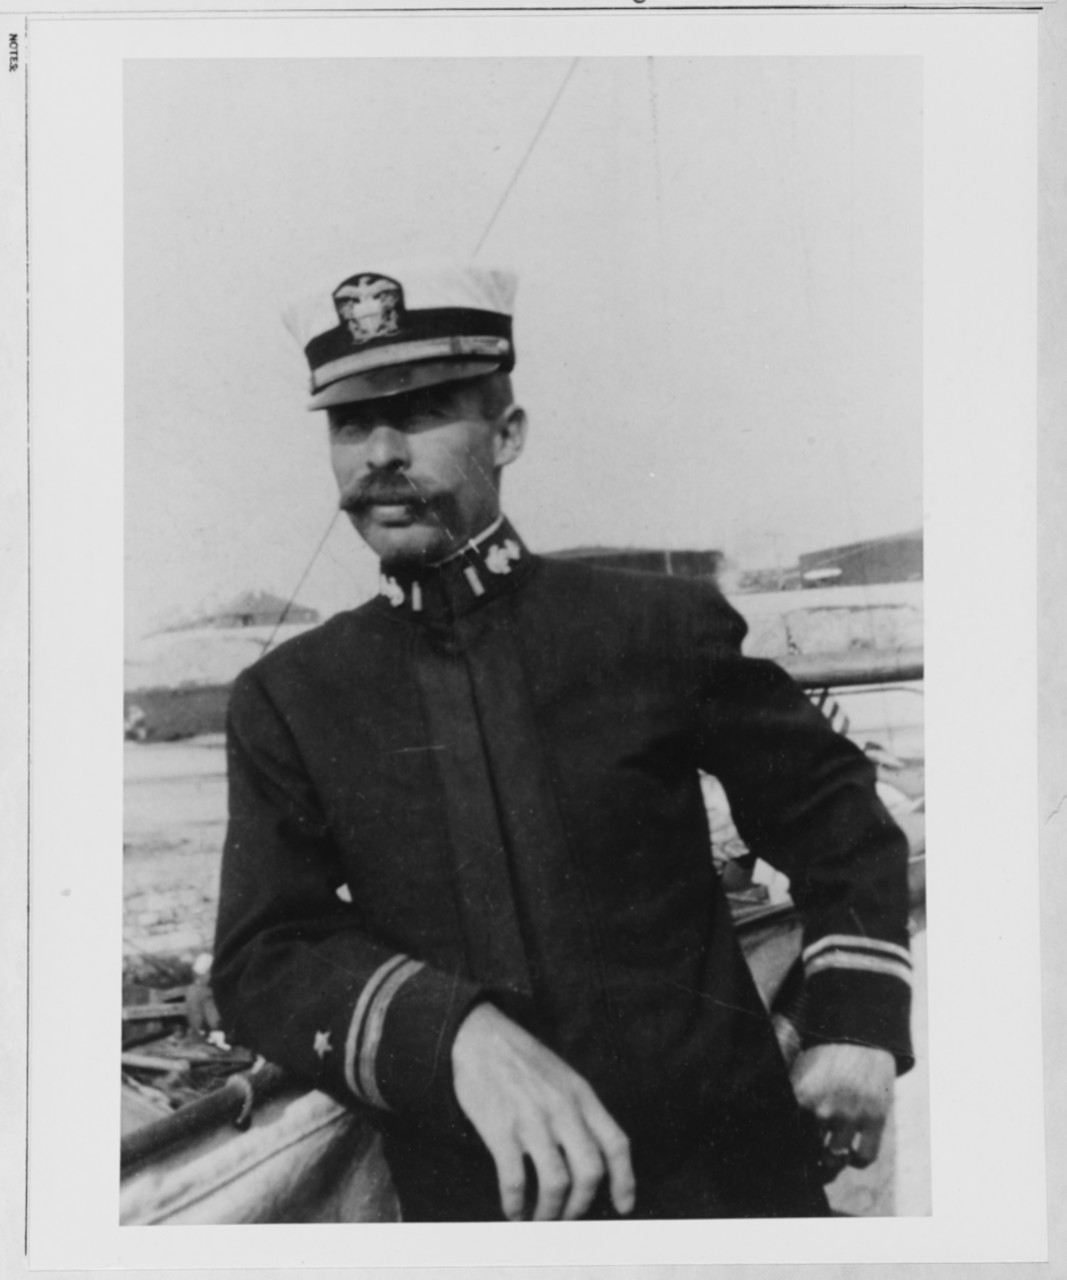 Lieutenant William E. Benson